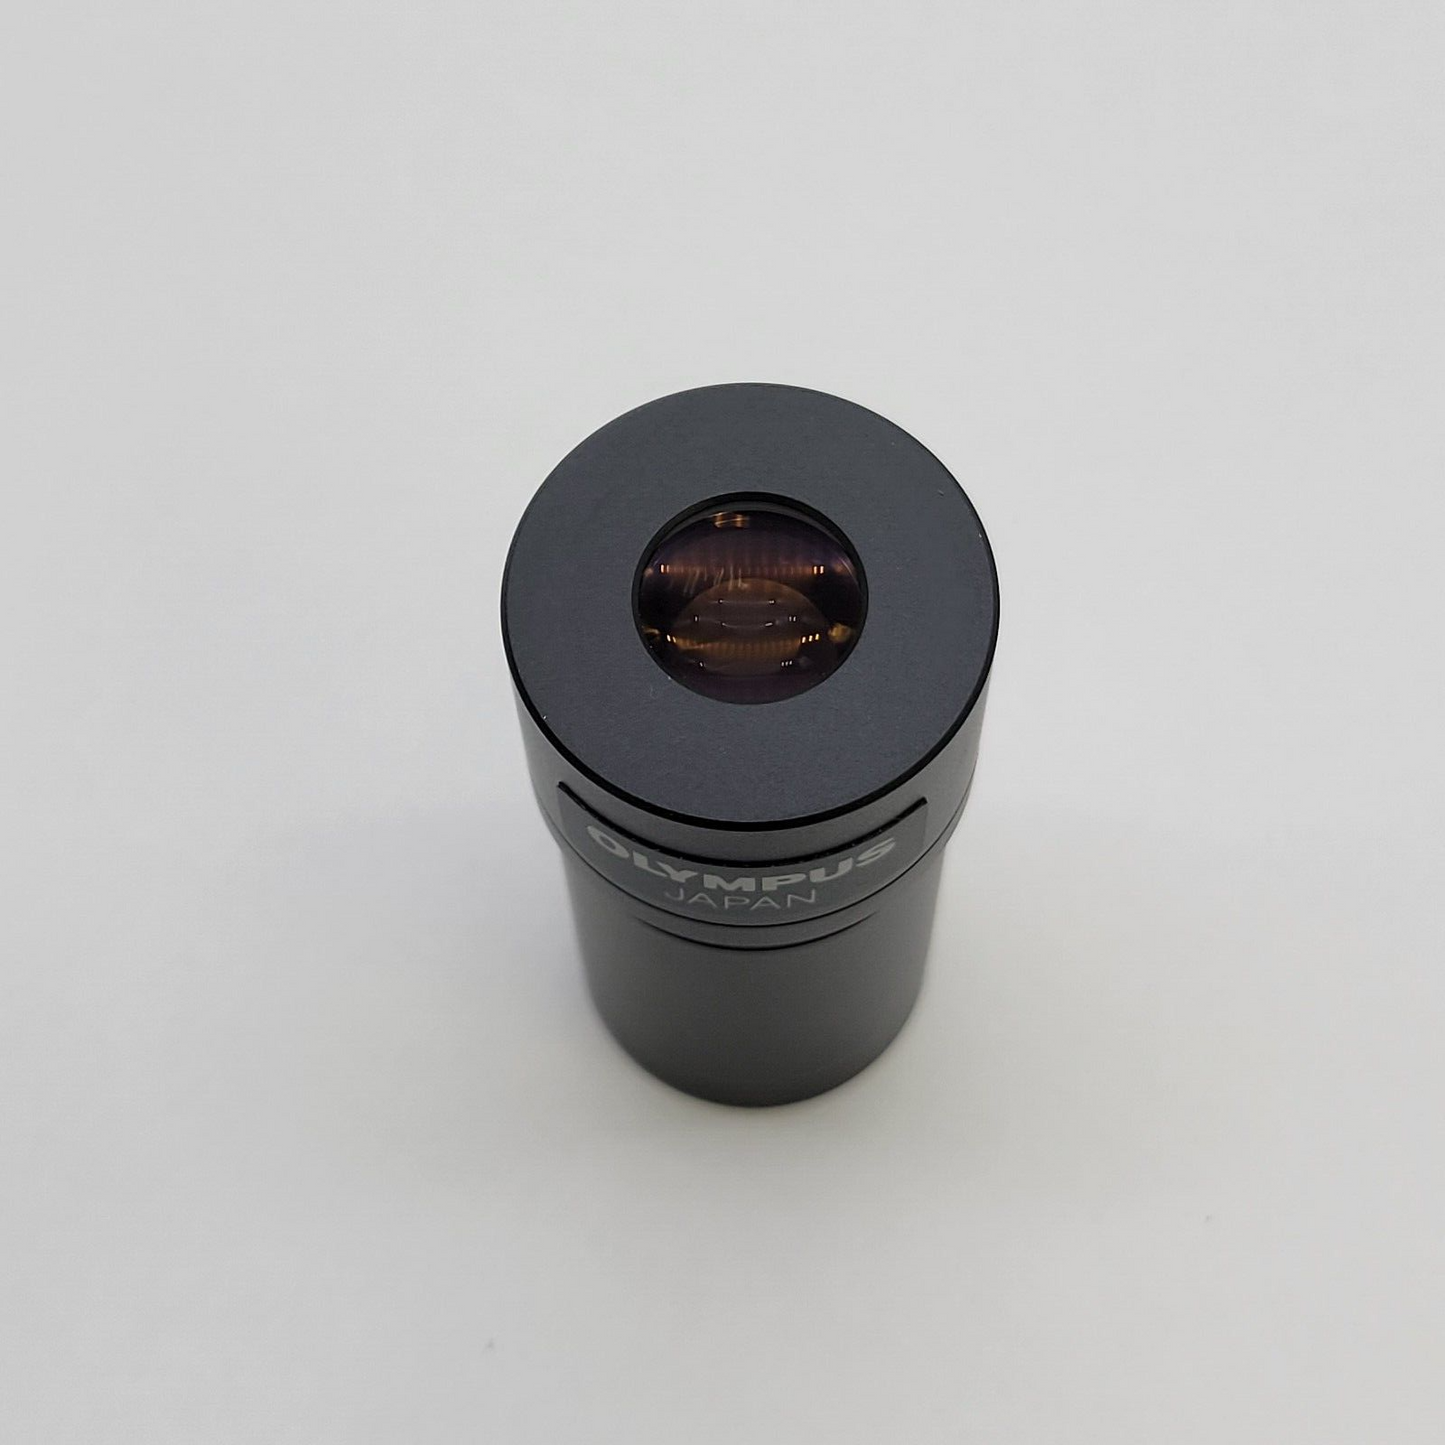 Olympus Microscope Eyepiece PE 2.5x 125 Photo Relay Lens - microscopemarketplace